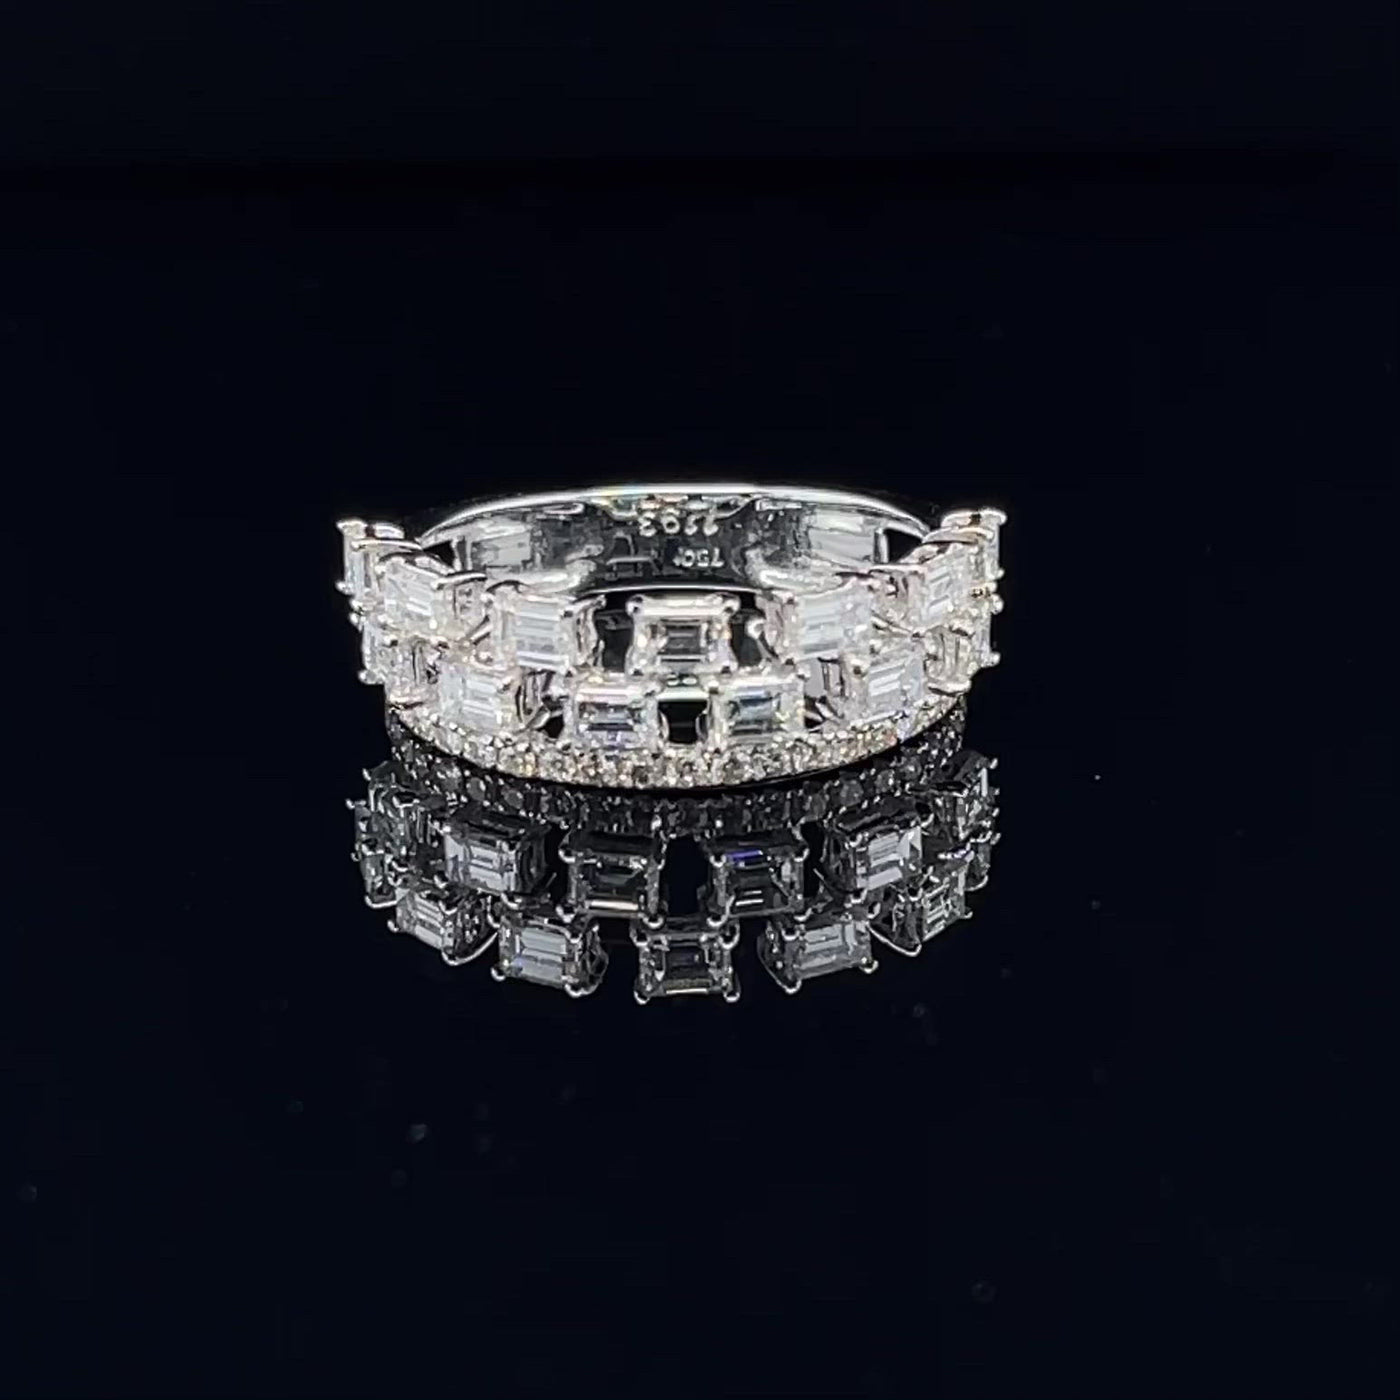 'Bela' Emerald cut diamond ring